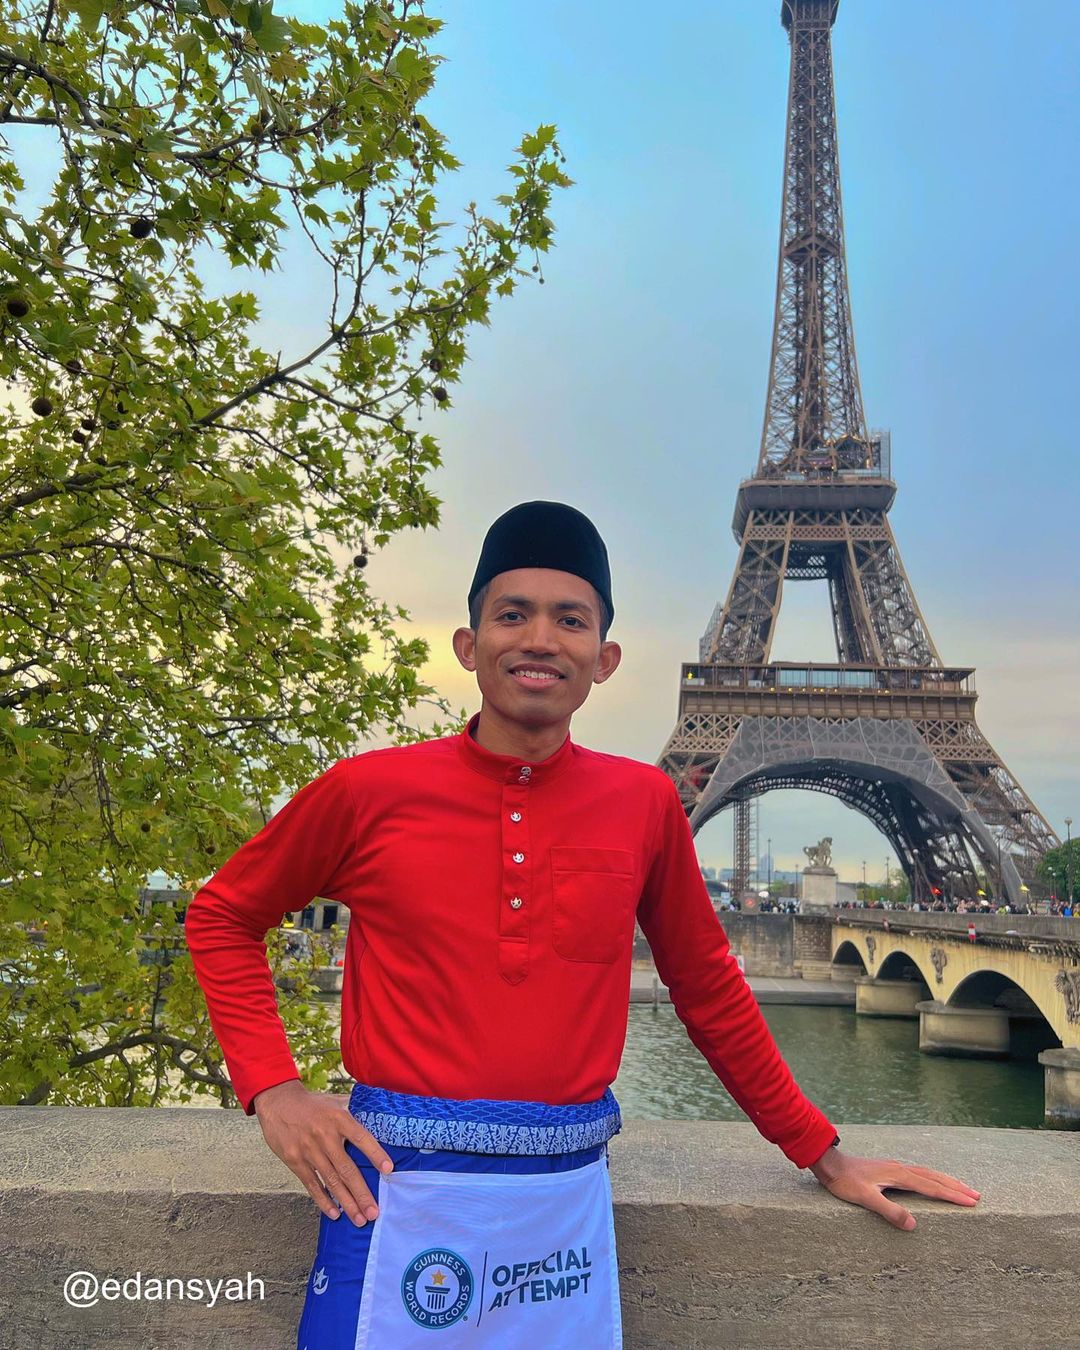 Man runs marathon in Baju Melayu - outfit